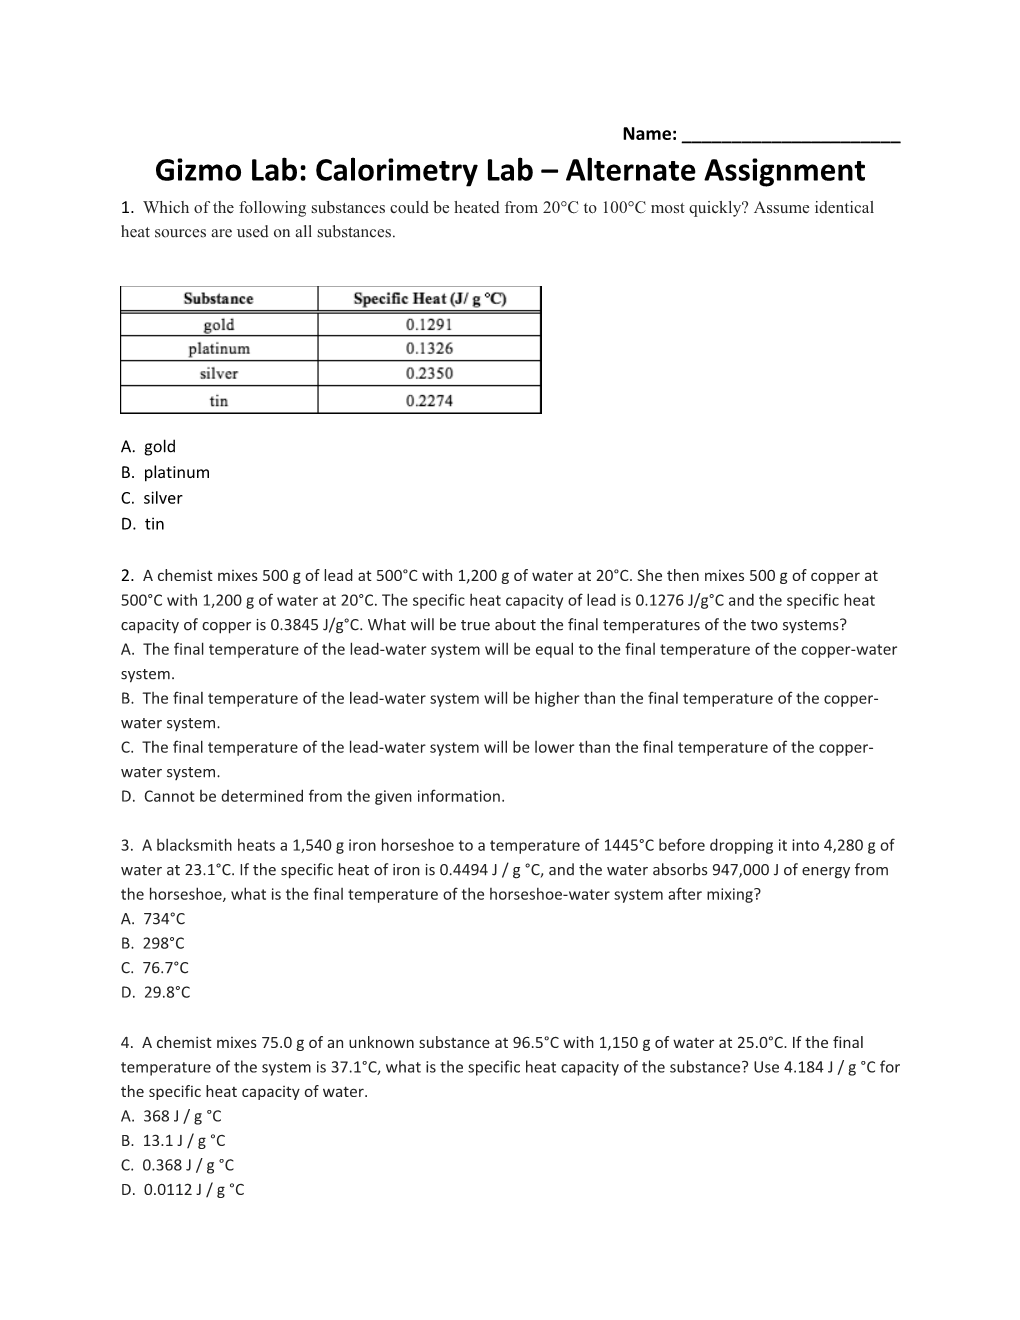 Gizmo Lab: Calorimetry Lab Alternate Assignment